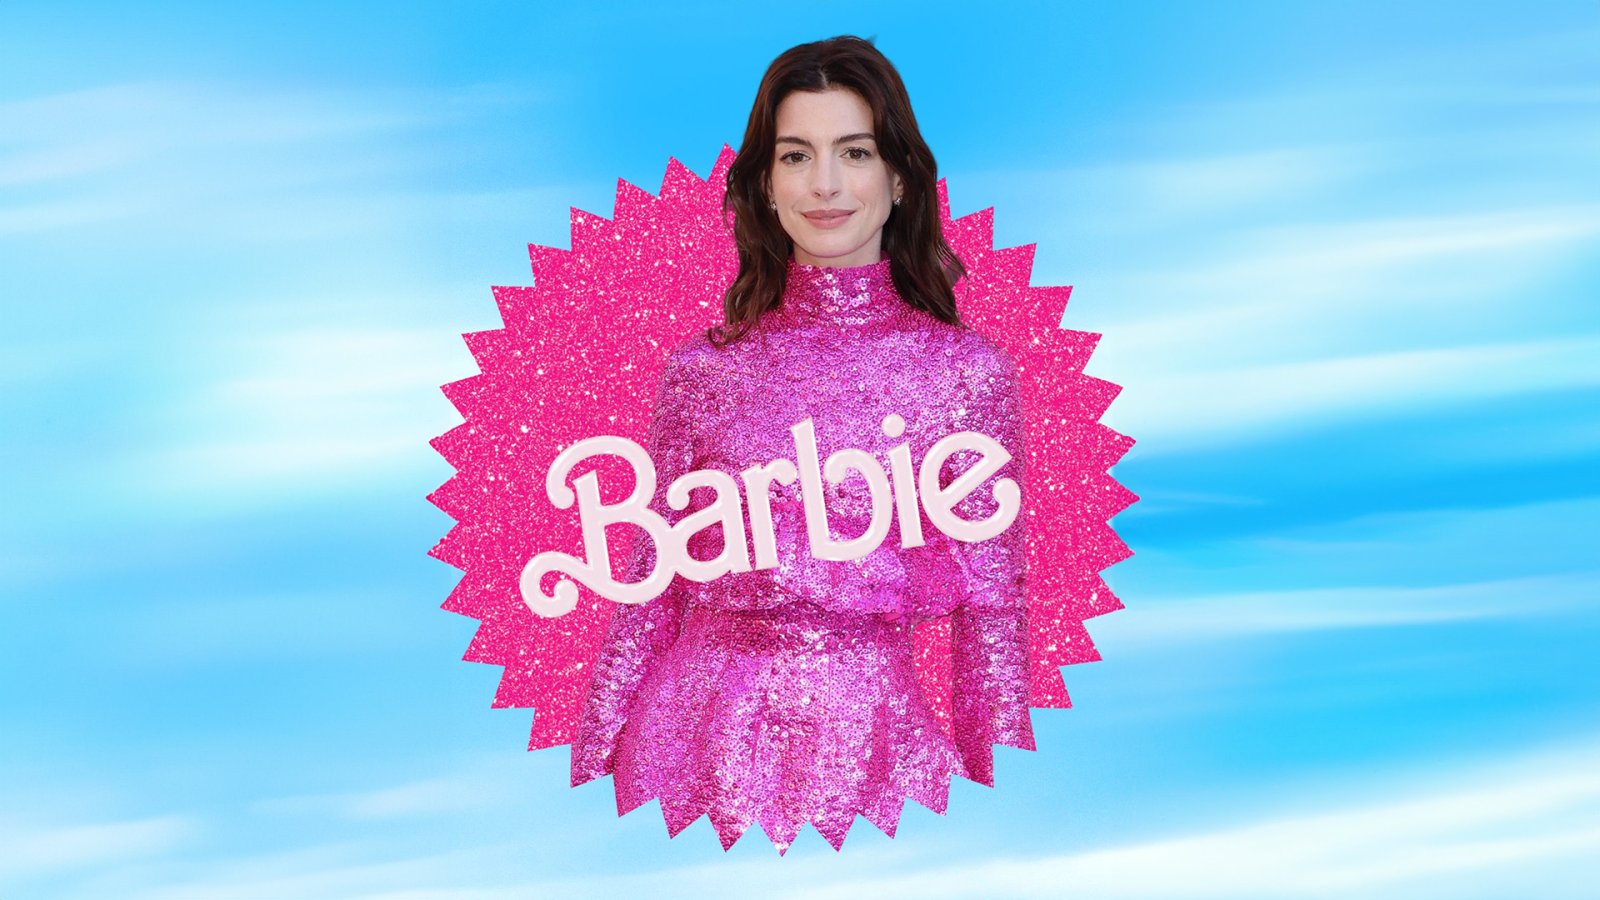 Anne Hathaway เผยใจ คิดว่าตัวเองโชคดีแล้วที่หนัง ‘Barbie’ ของ Sony Pictures ไม่ได้สร้าง